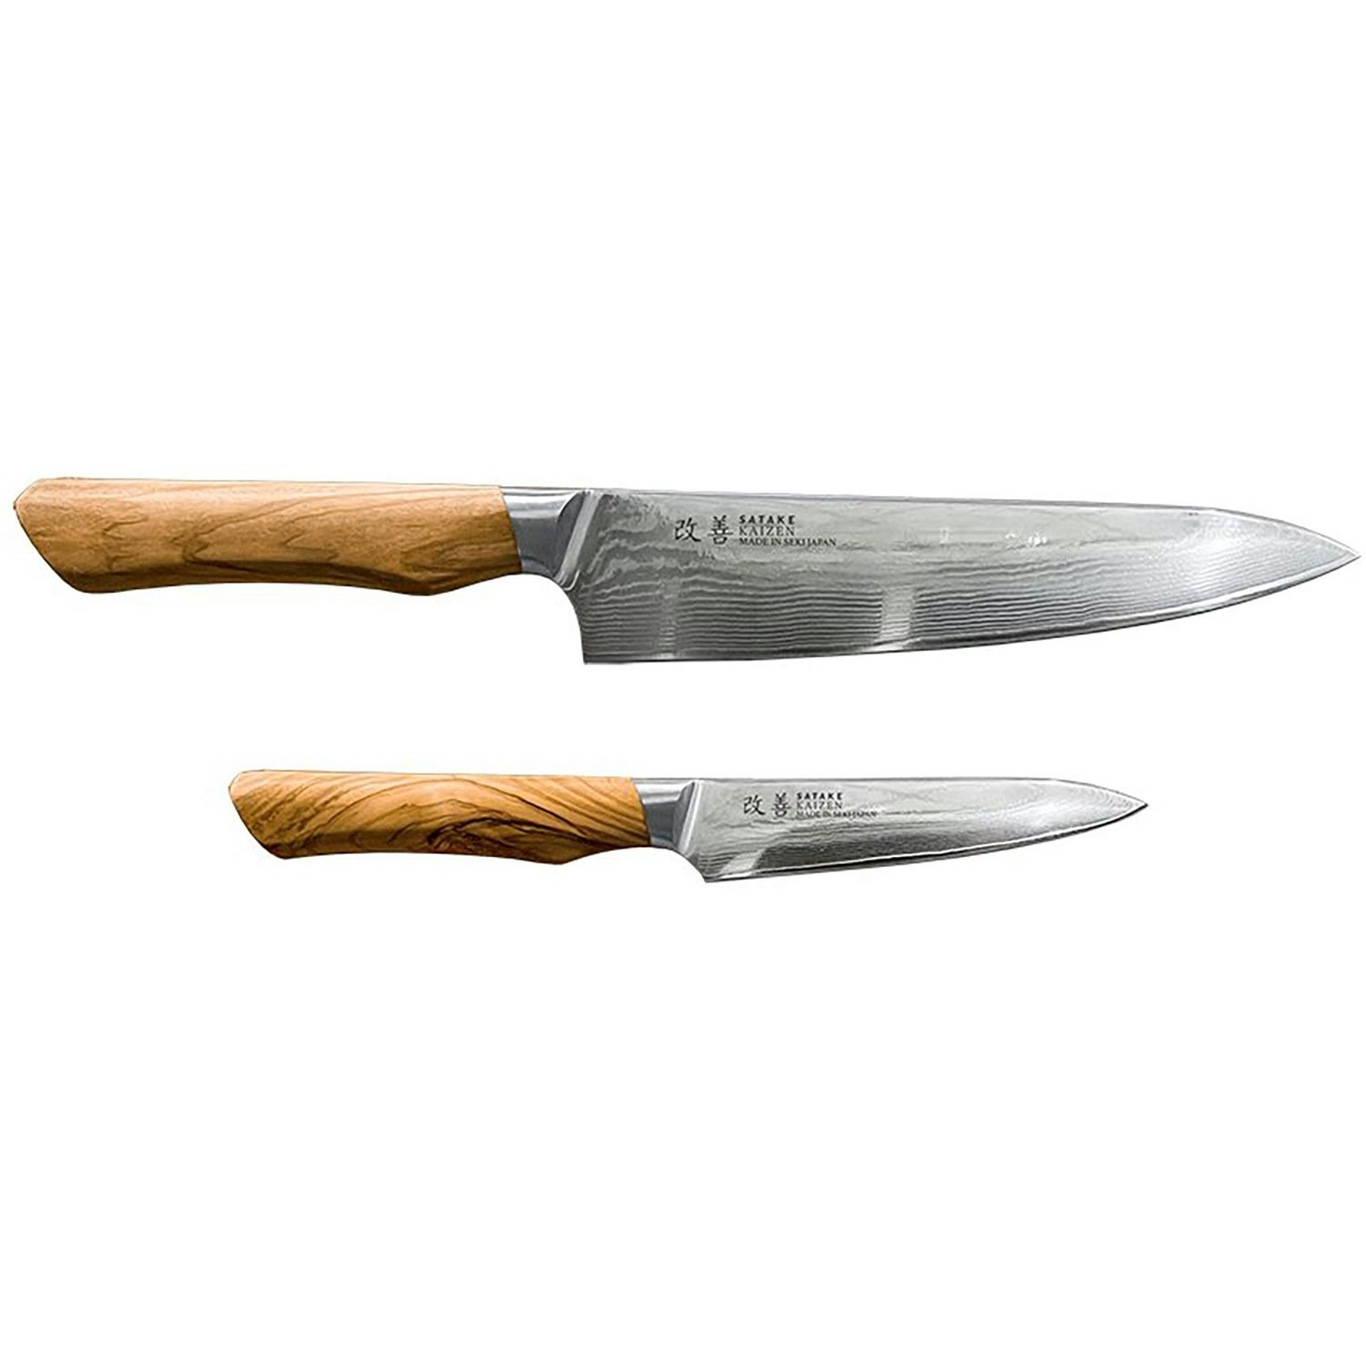 https://royaldesign.com/image/2/satake-satake-kaizen-2pcs-knife-set-gyuto-petty-0?w=800&quality=80